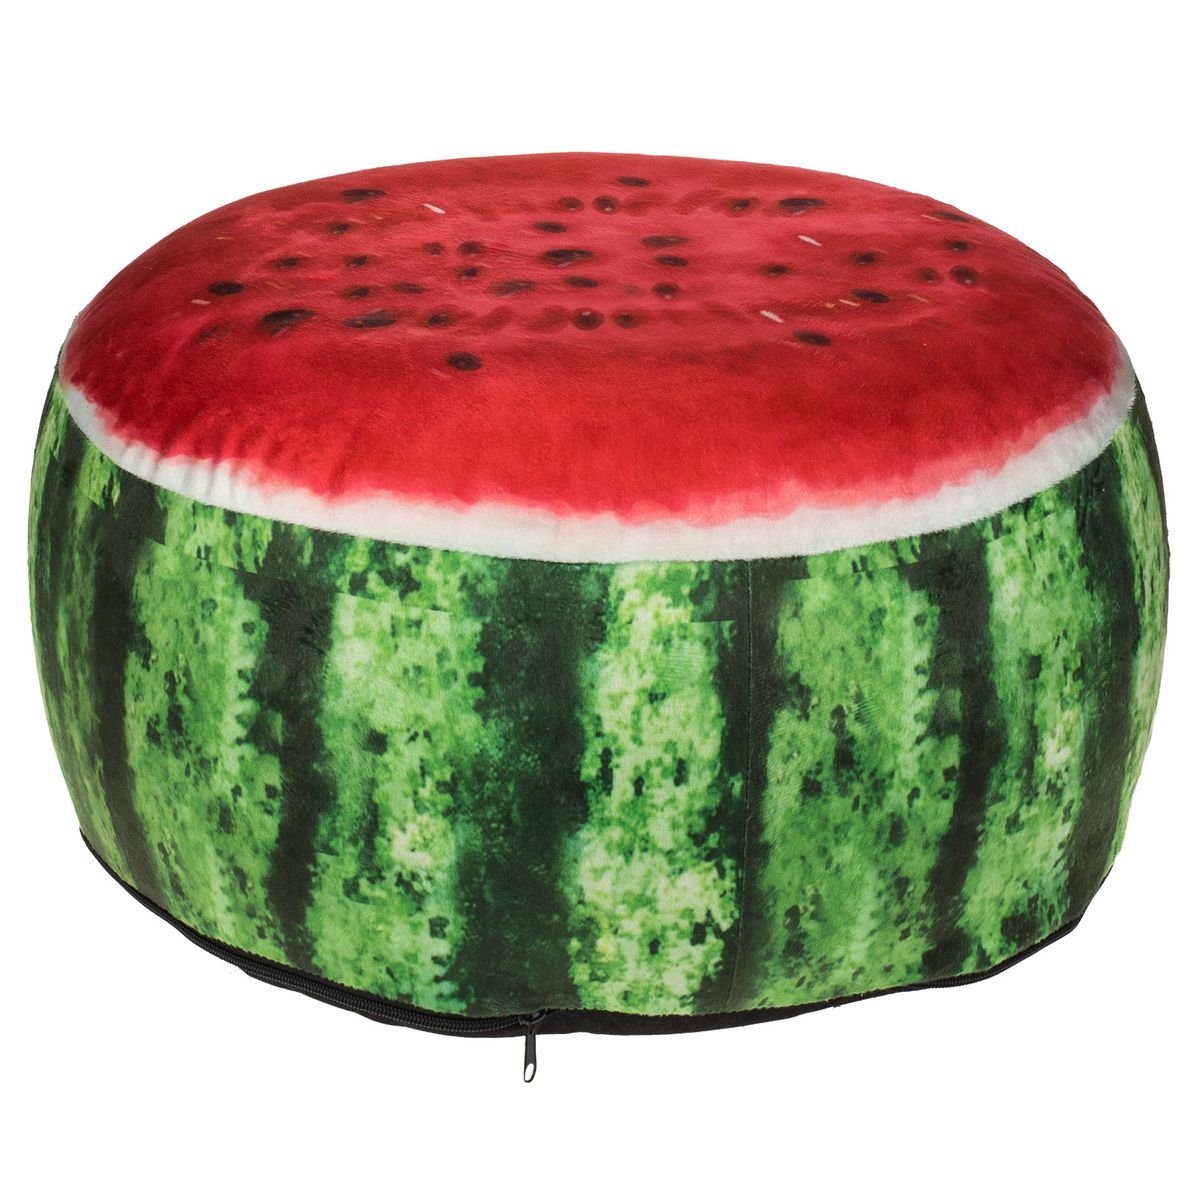 kg, Polyester Sitzkissen aufblasbares max. of abnehmbar Bezug Blue the Out Bodenkissen 80 45x20cm Wassermelone